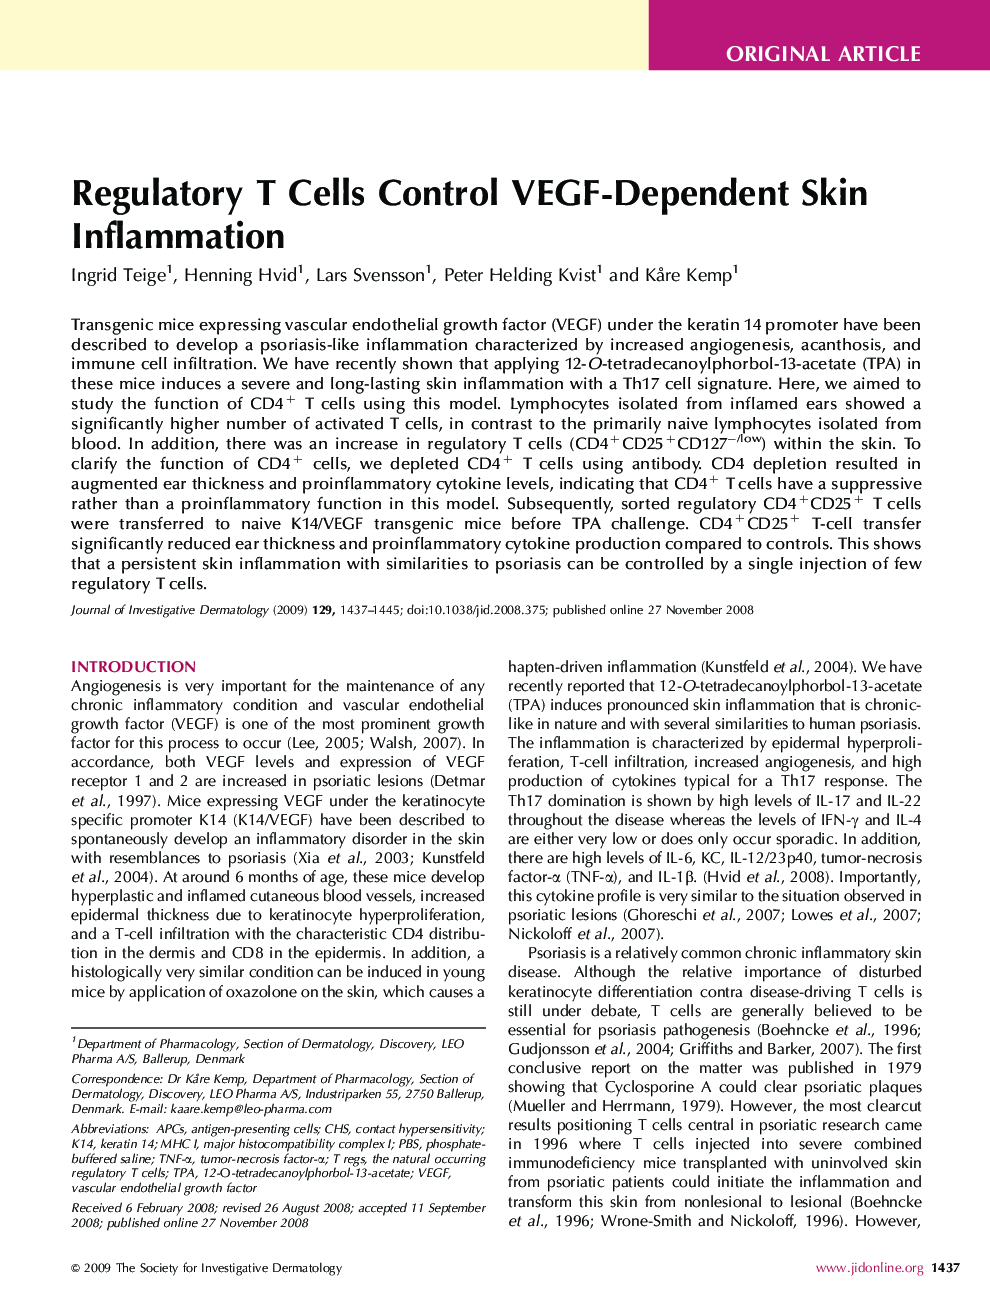 Regulatory T Cells Control VEGF-Dependent Skin Inflammation